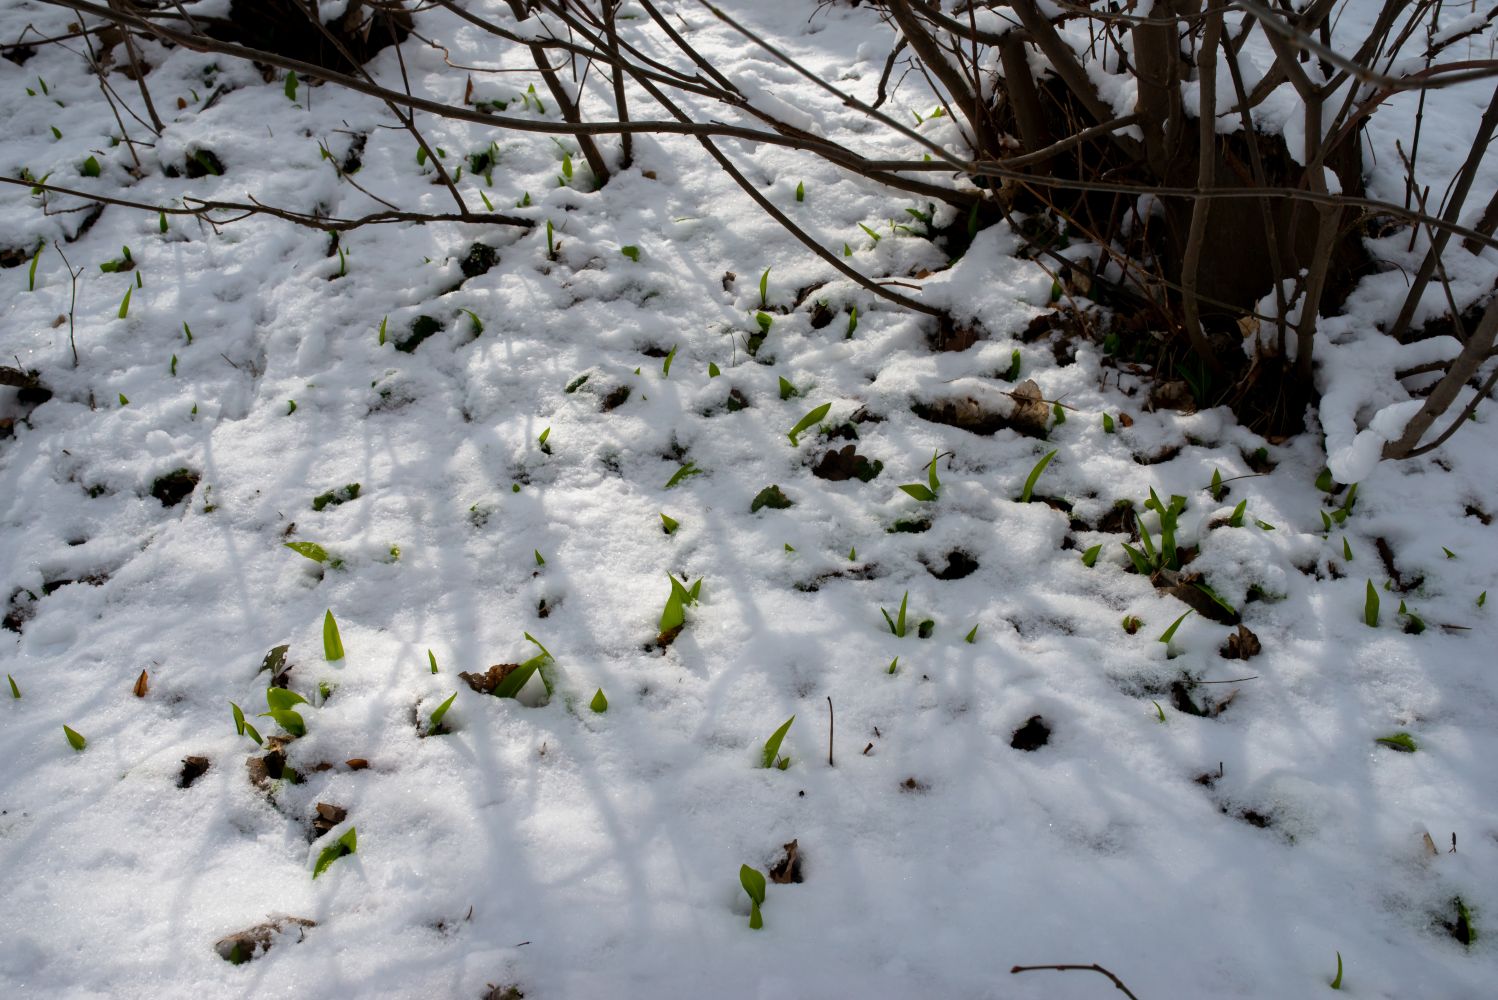 Wild garlic leaves poking through snow